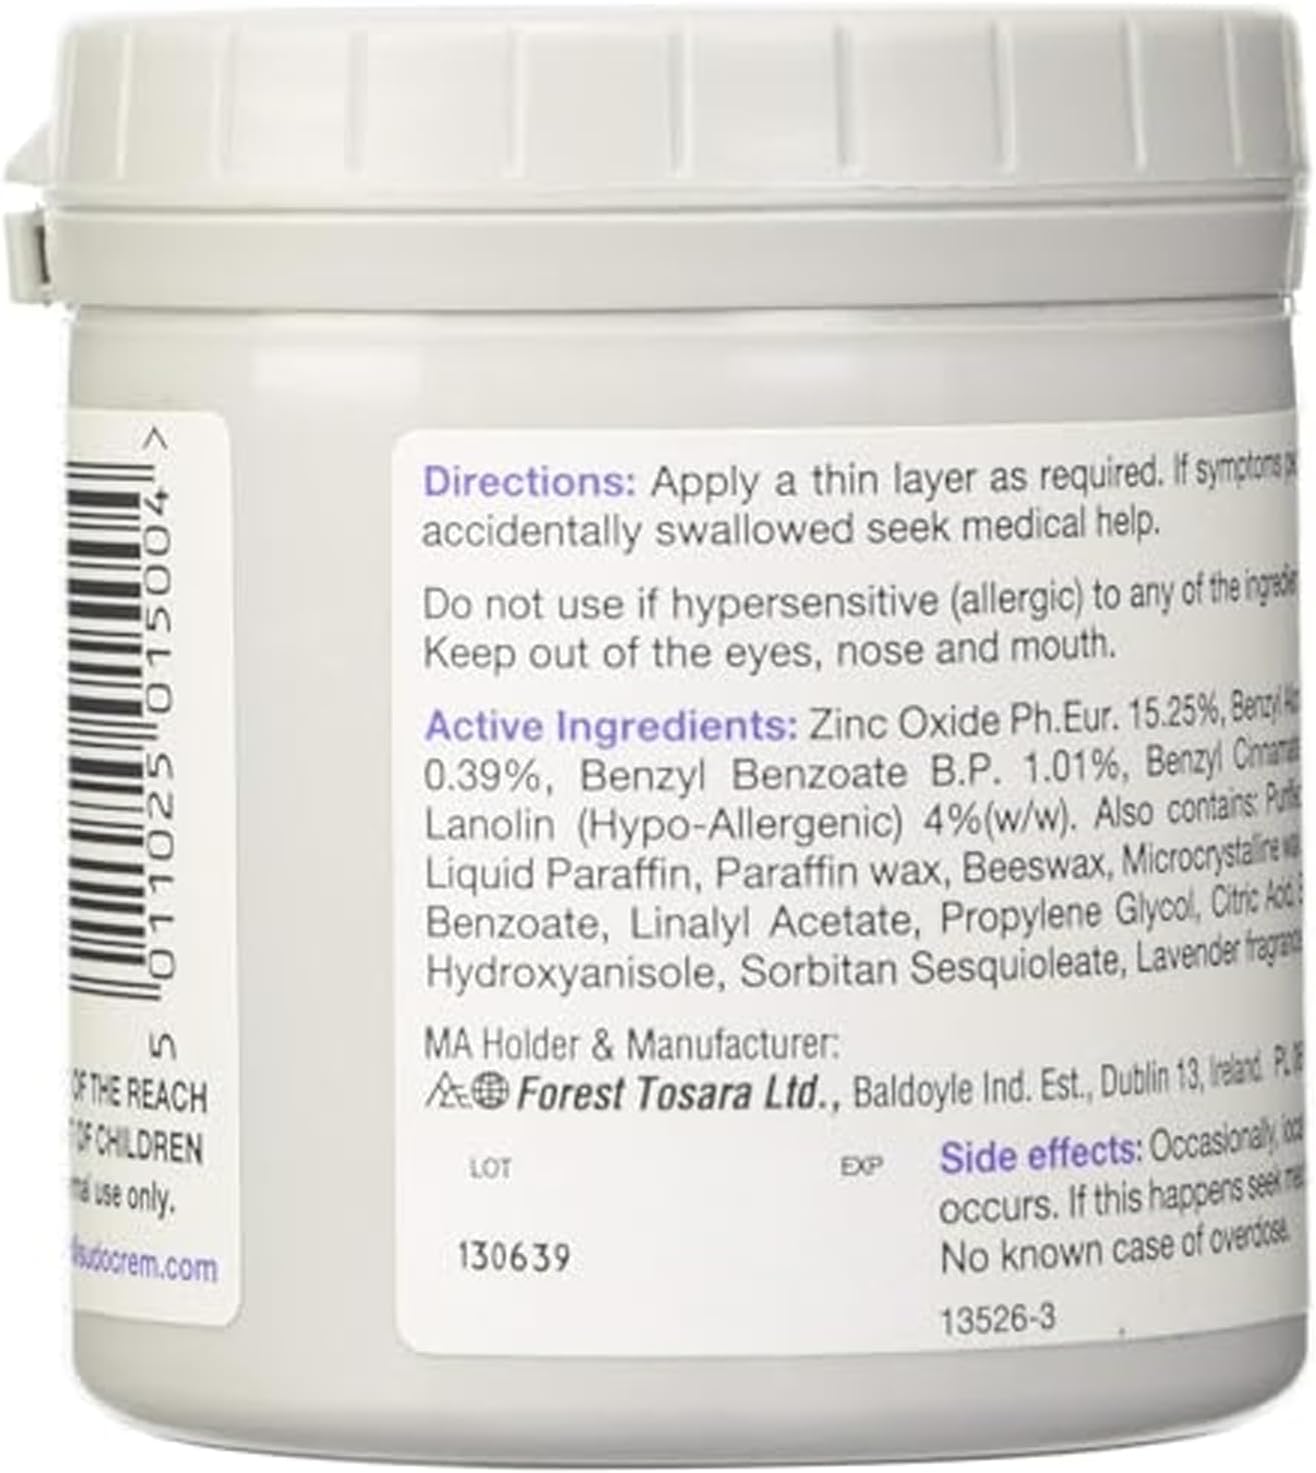 Sudocrem Antiseptic Healing Cream For Nappy Rash, Eczema, Burns - 250g